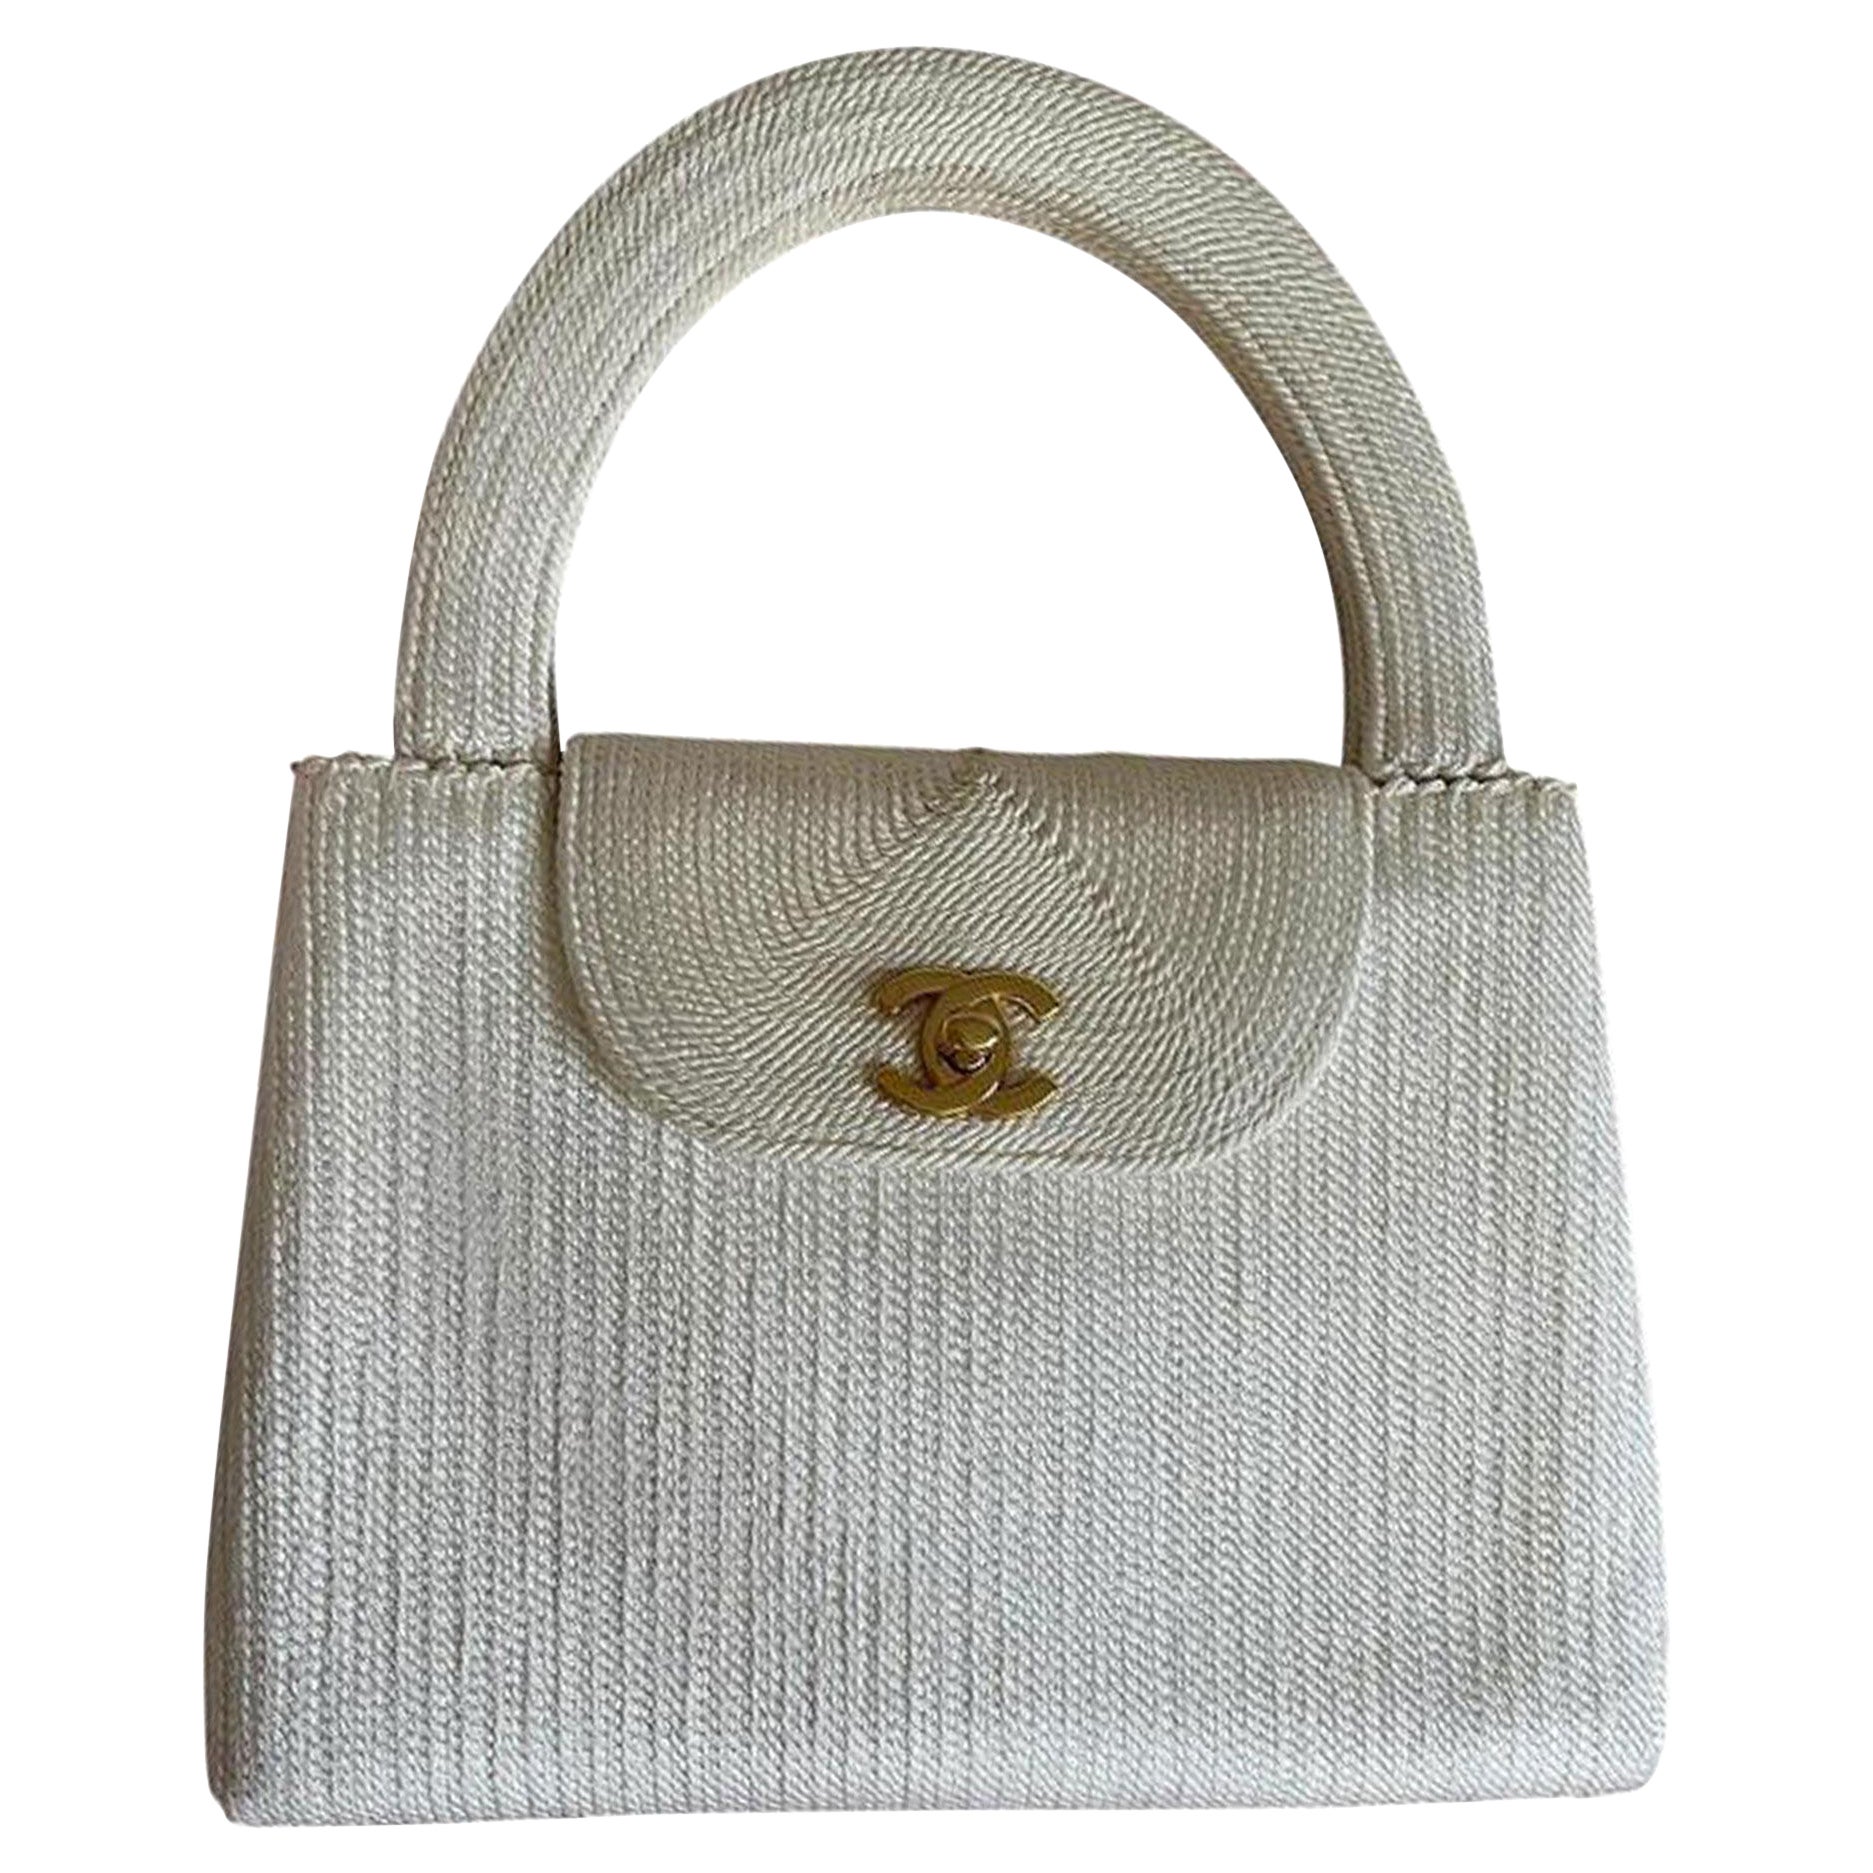 Chanel Bag Mini Kelly - 10 For Sale on 1stDibs  chanel kelly mini price,  chanel mini kelly bag price, chanel kelly nano bag